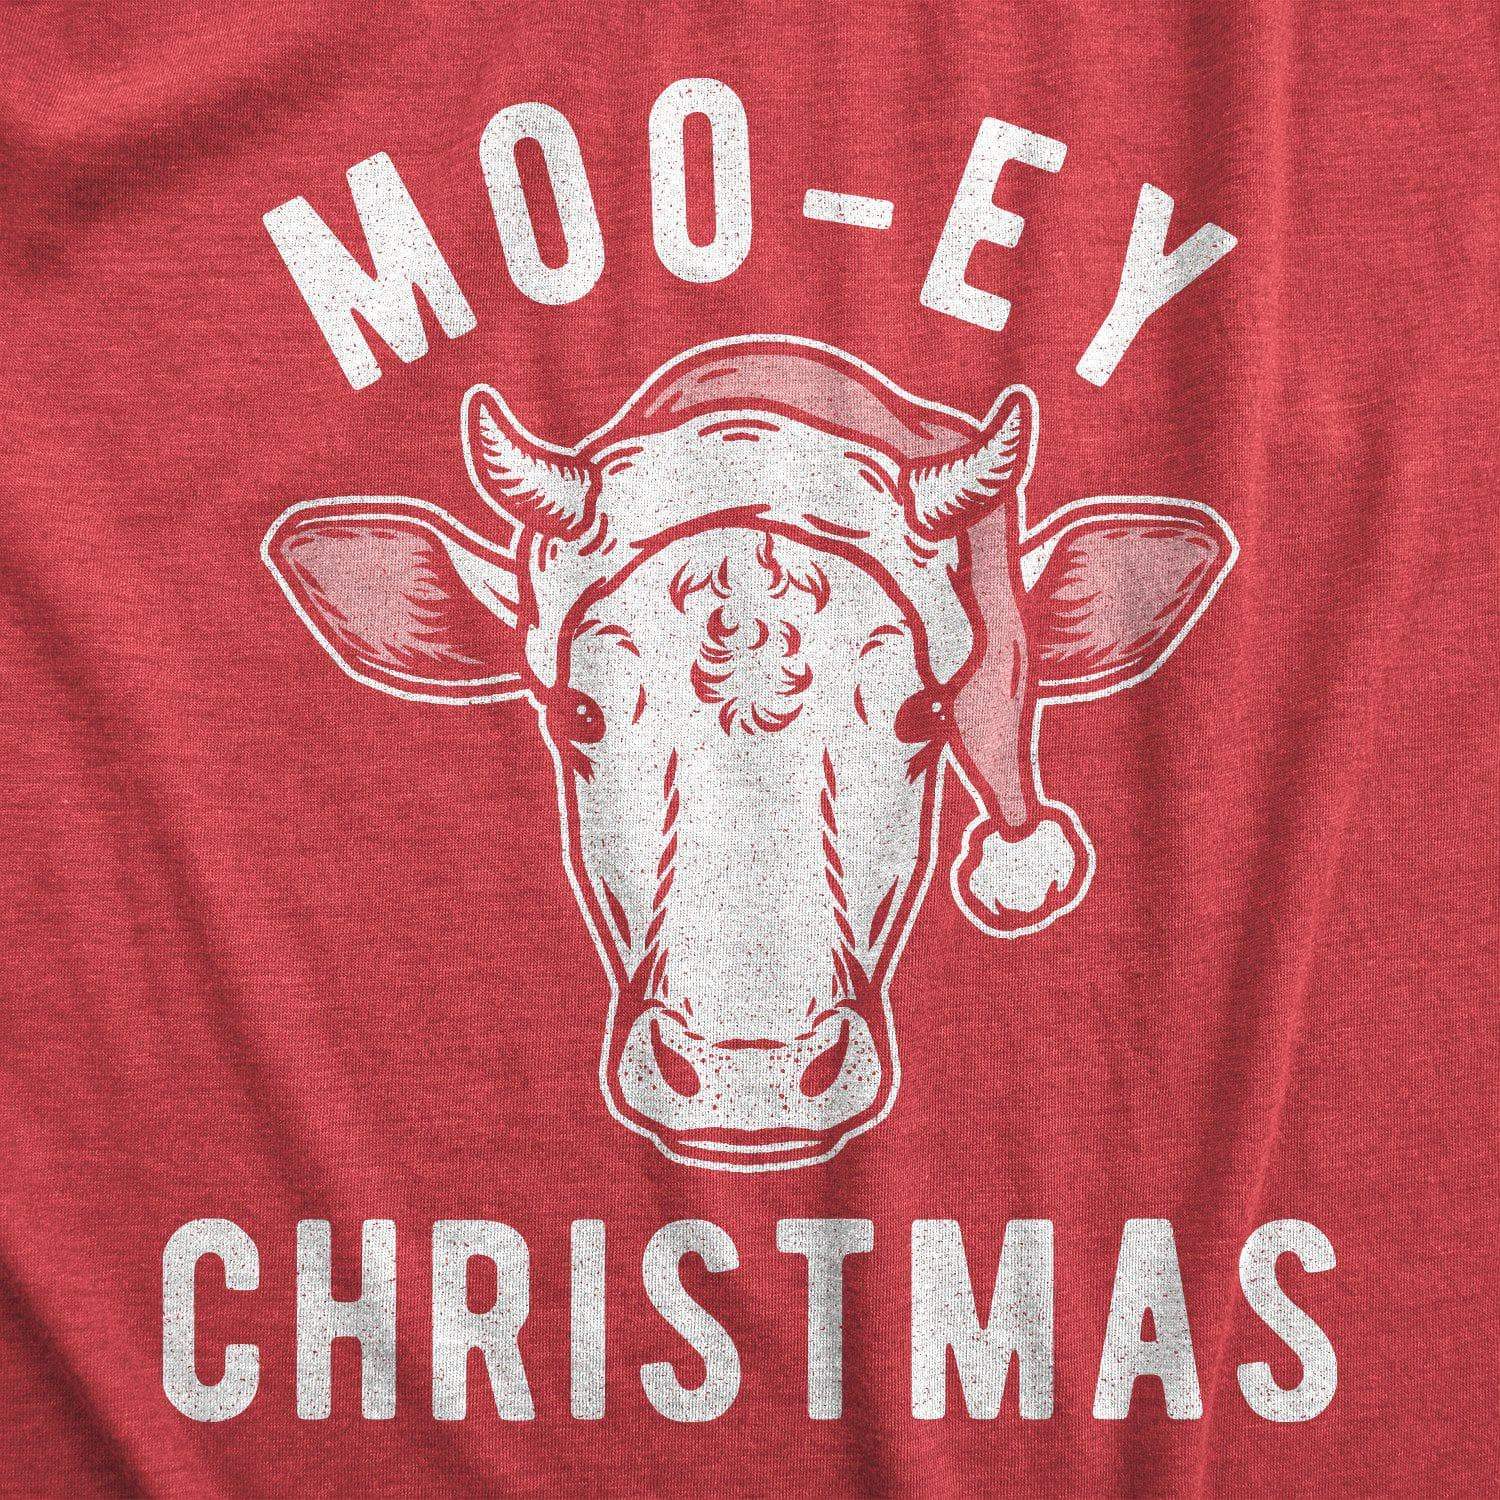 Moo-ey Christmas Women's Tshirt - Crazy Dog T-Shirts